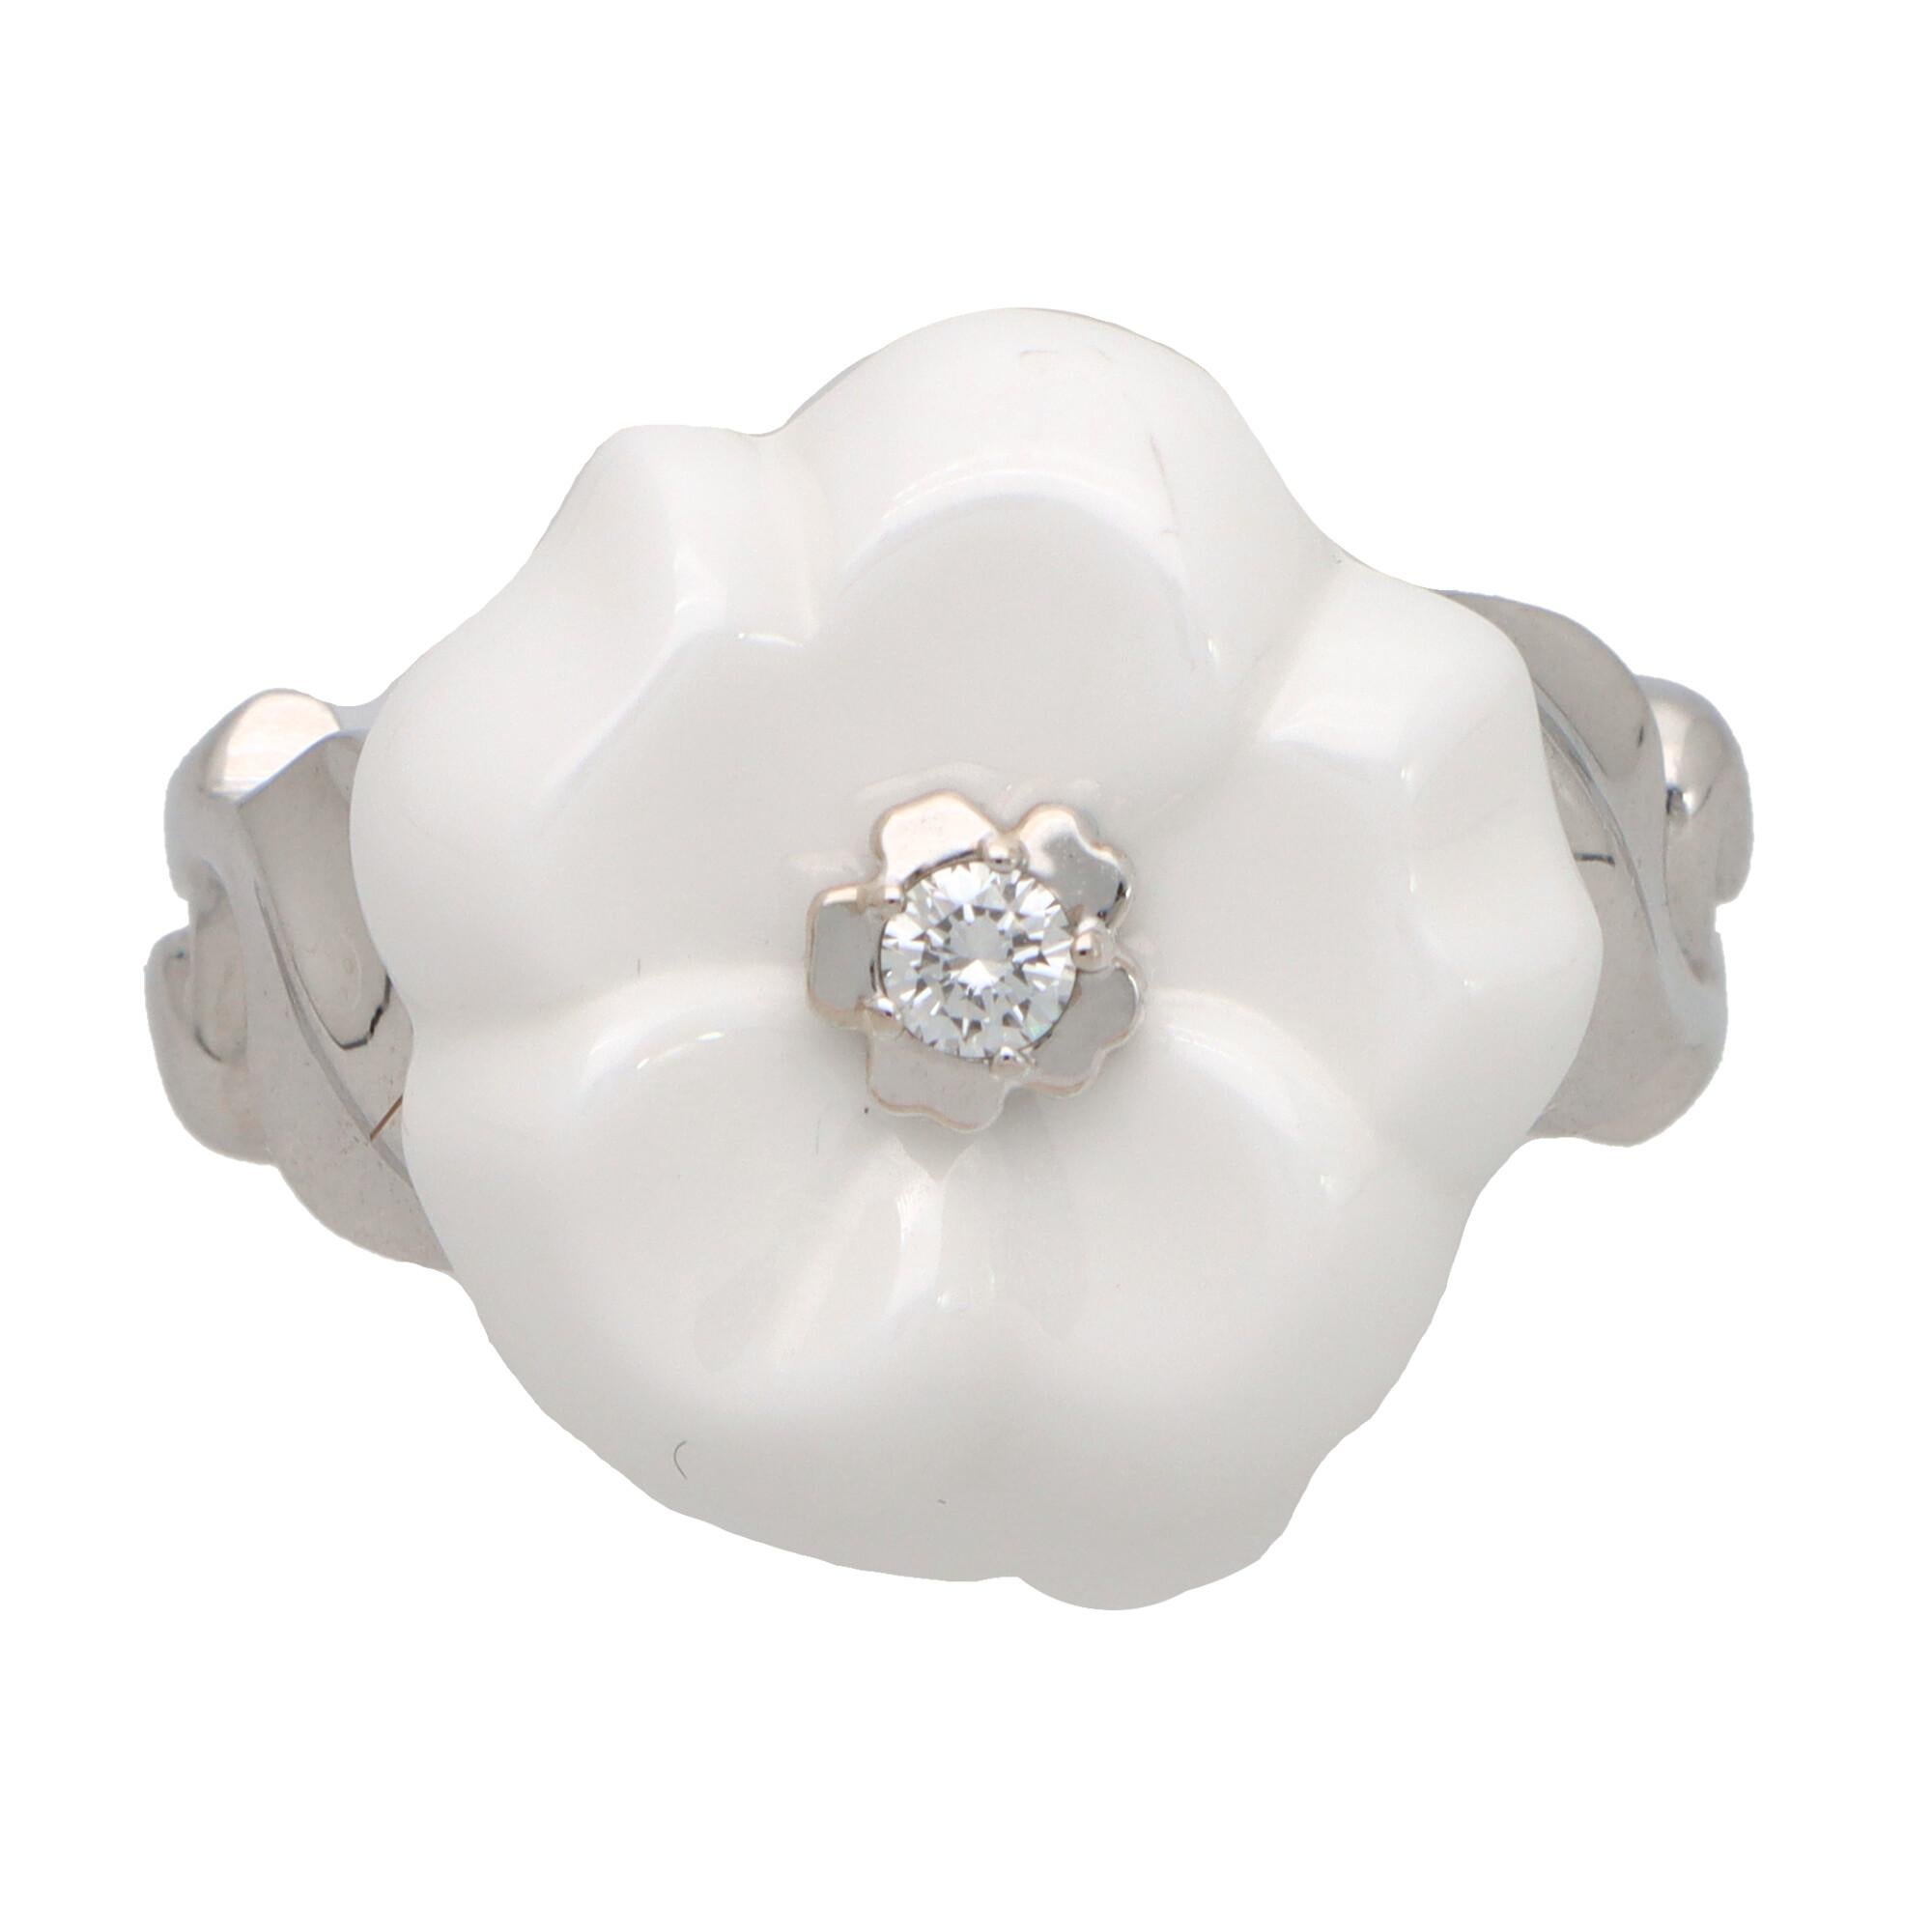 Vintage Chanel Camélia Galbé White Ceramic and Diamond Flower Ring in White Gold